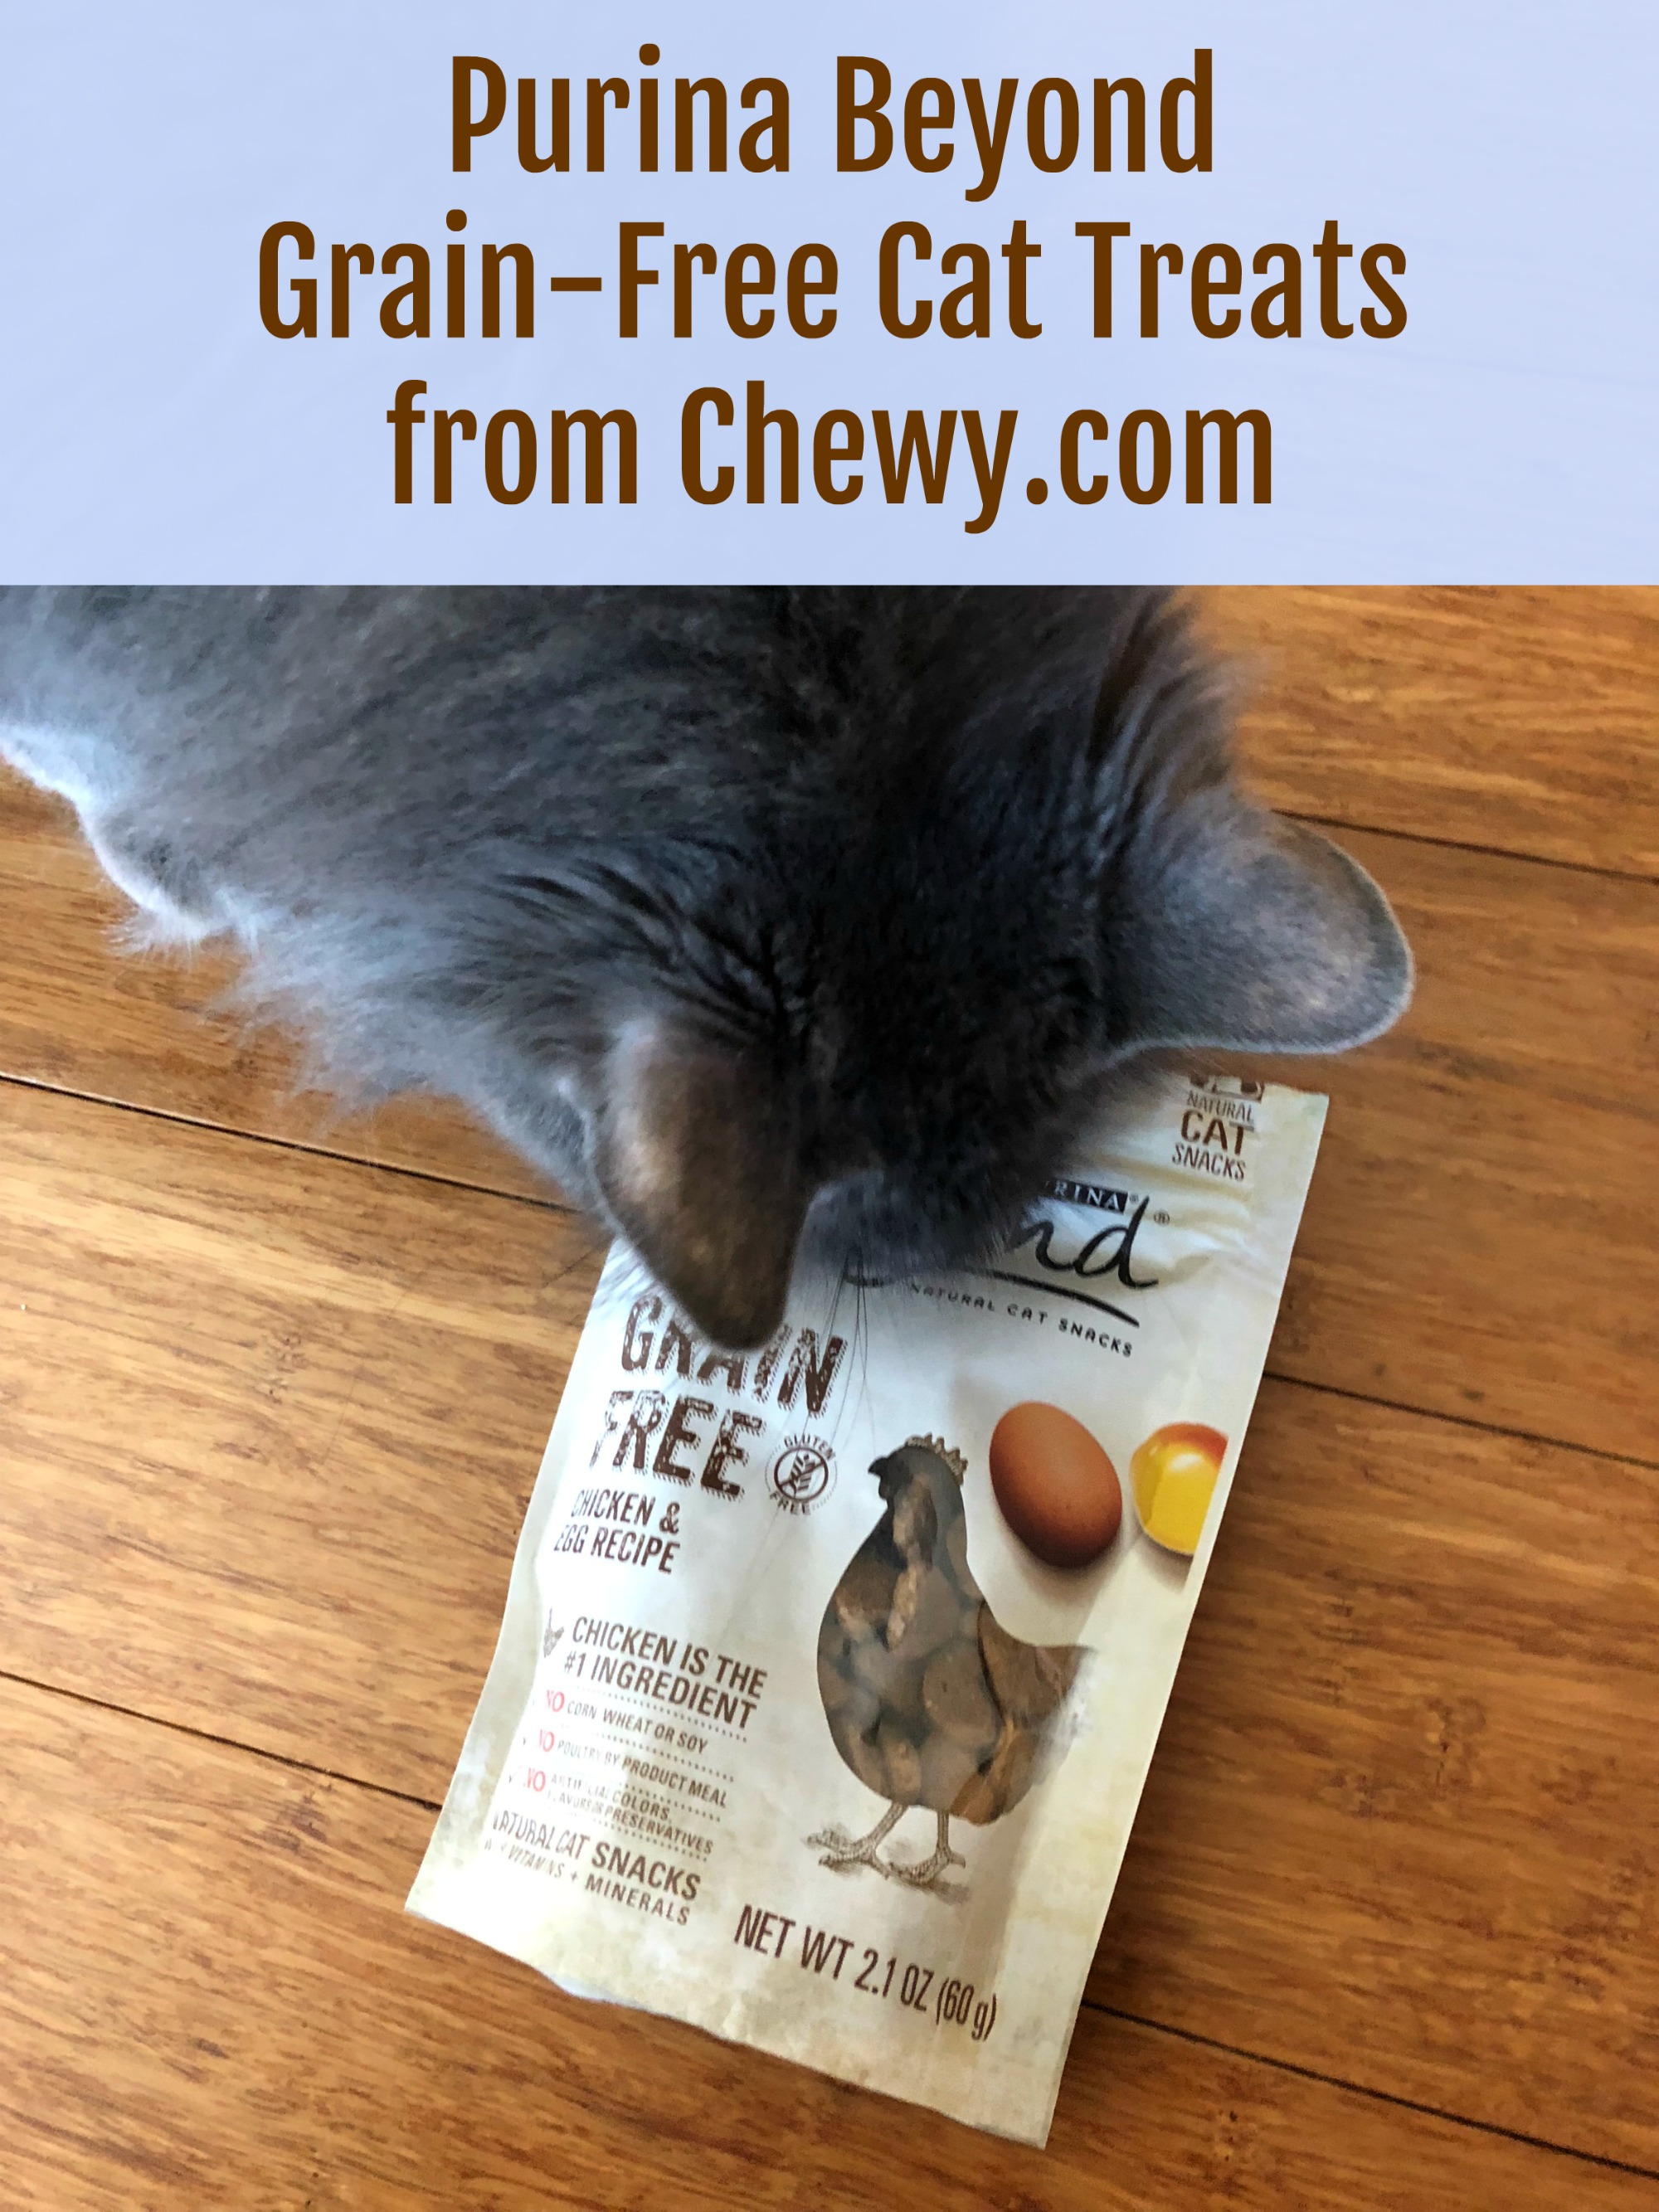 Purina Beyond Cat Treats Chewy.com